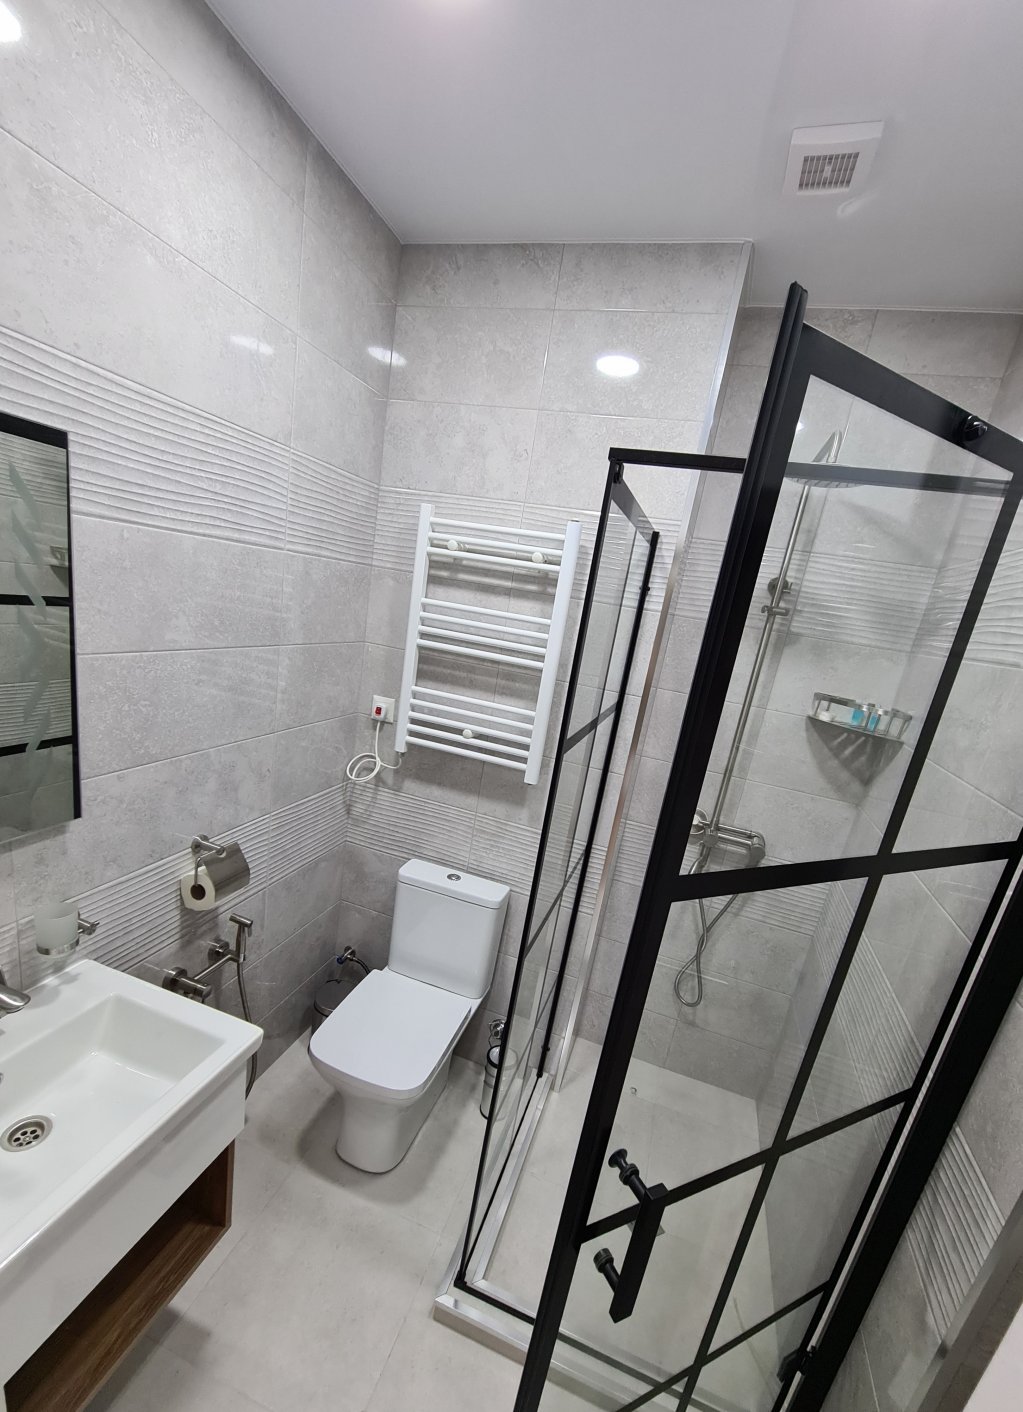 Standard Double room in hotel "Comfort Time 17" # 1704 id-1014 - Batumi Vacation Rentals